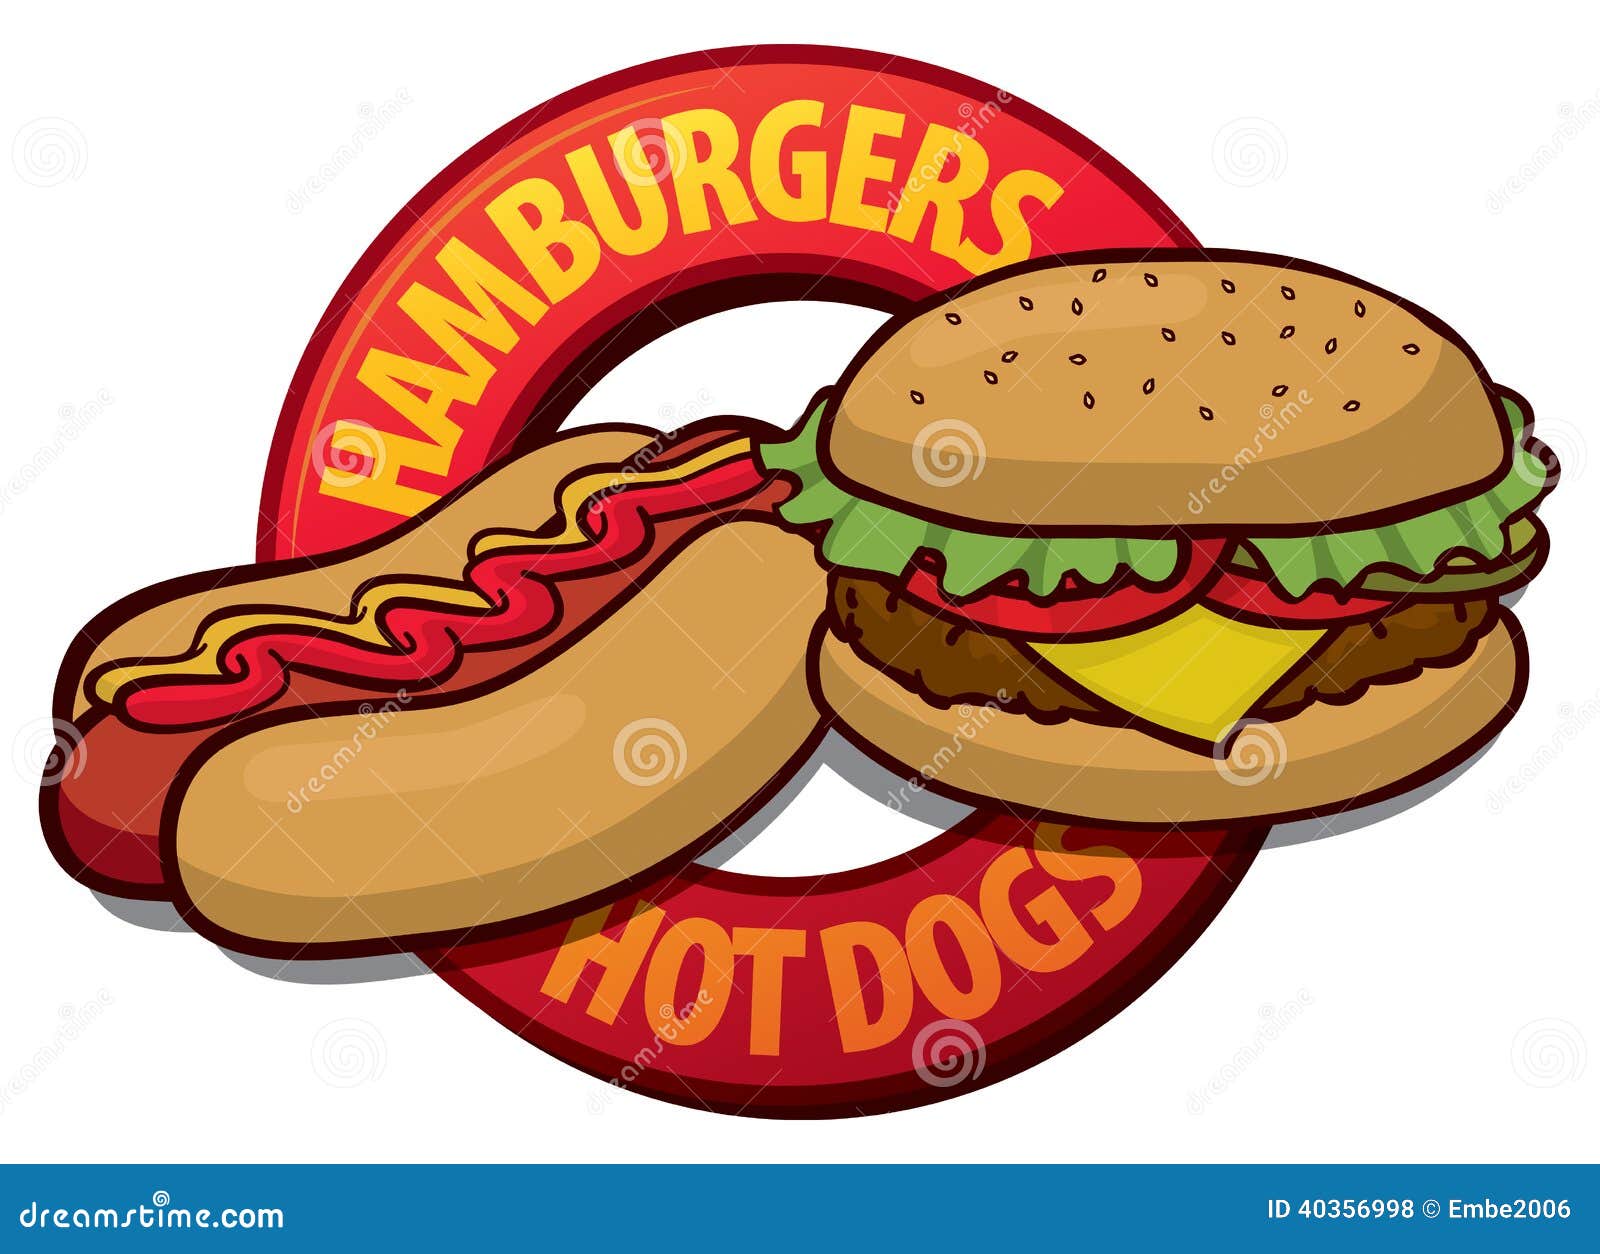 hamburger hot dog